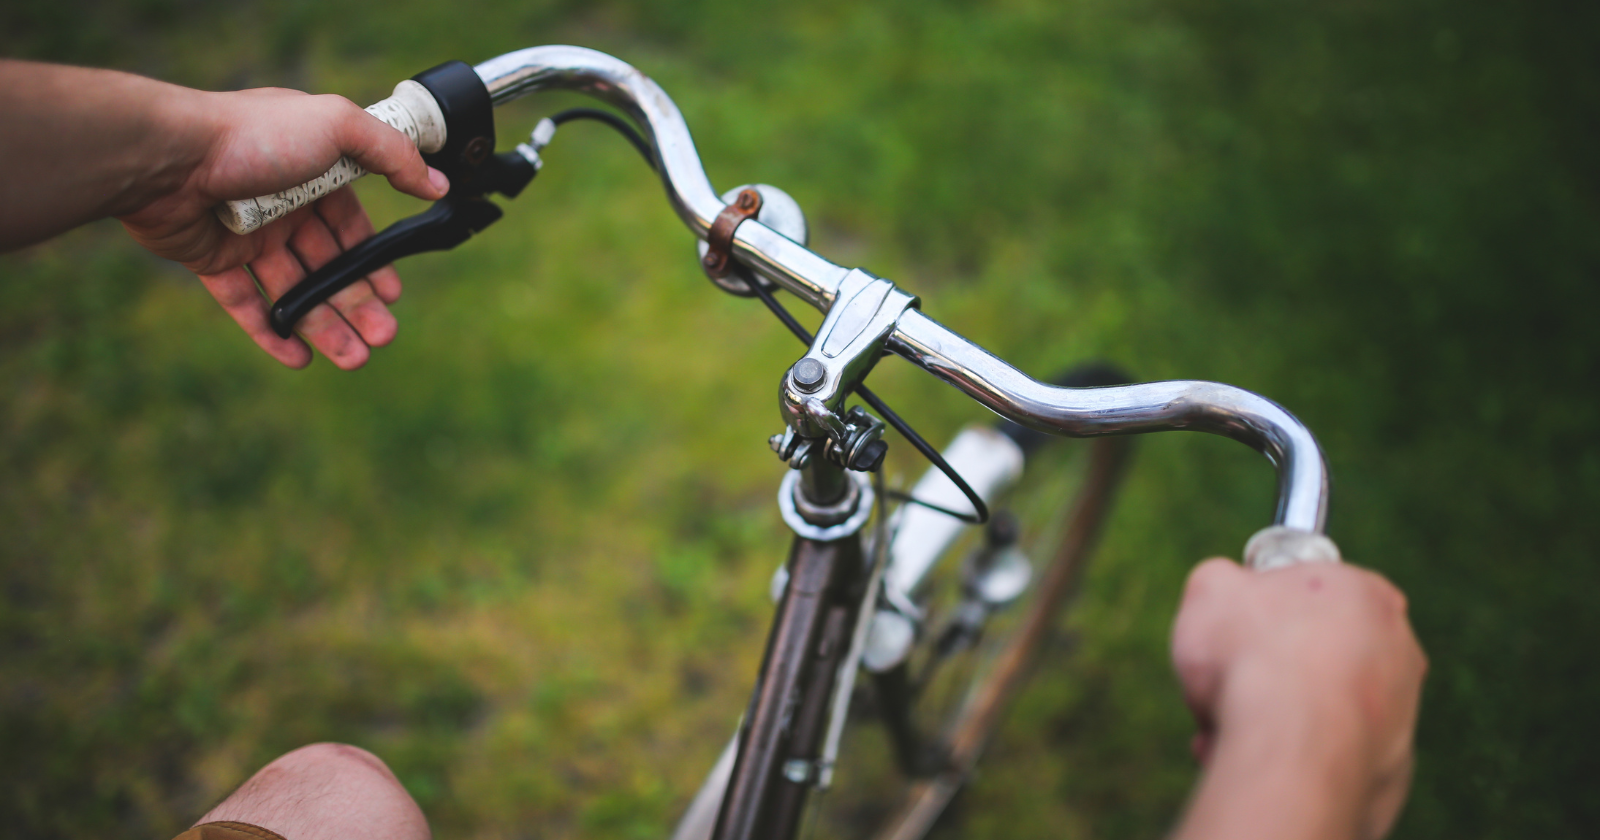 How To Adjust Bike Handlebars